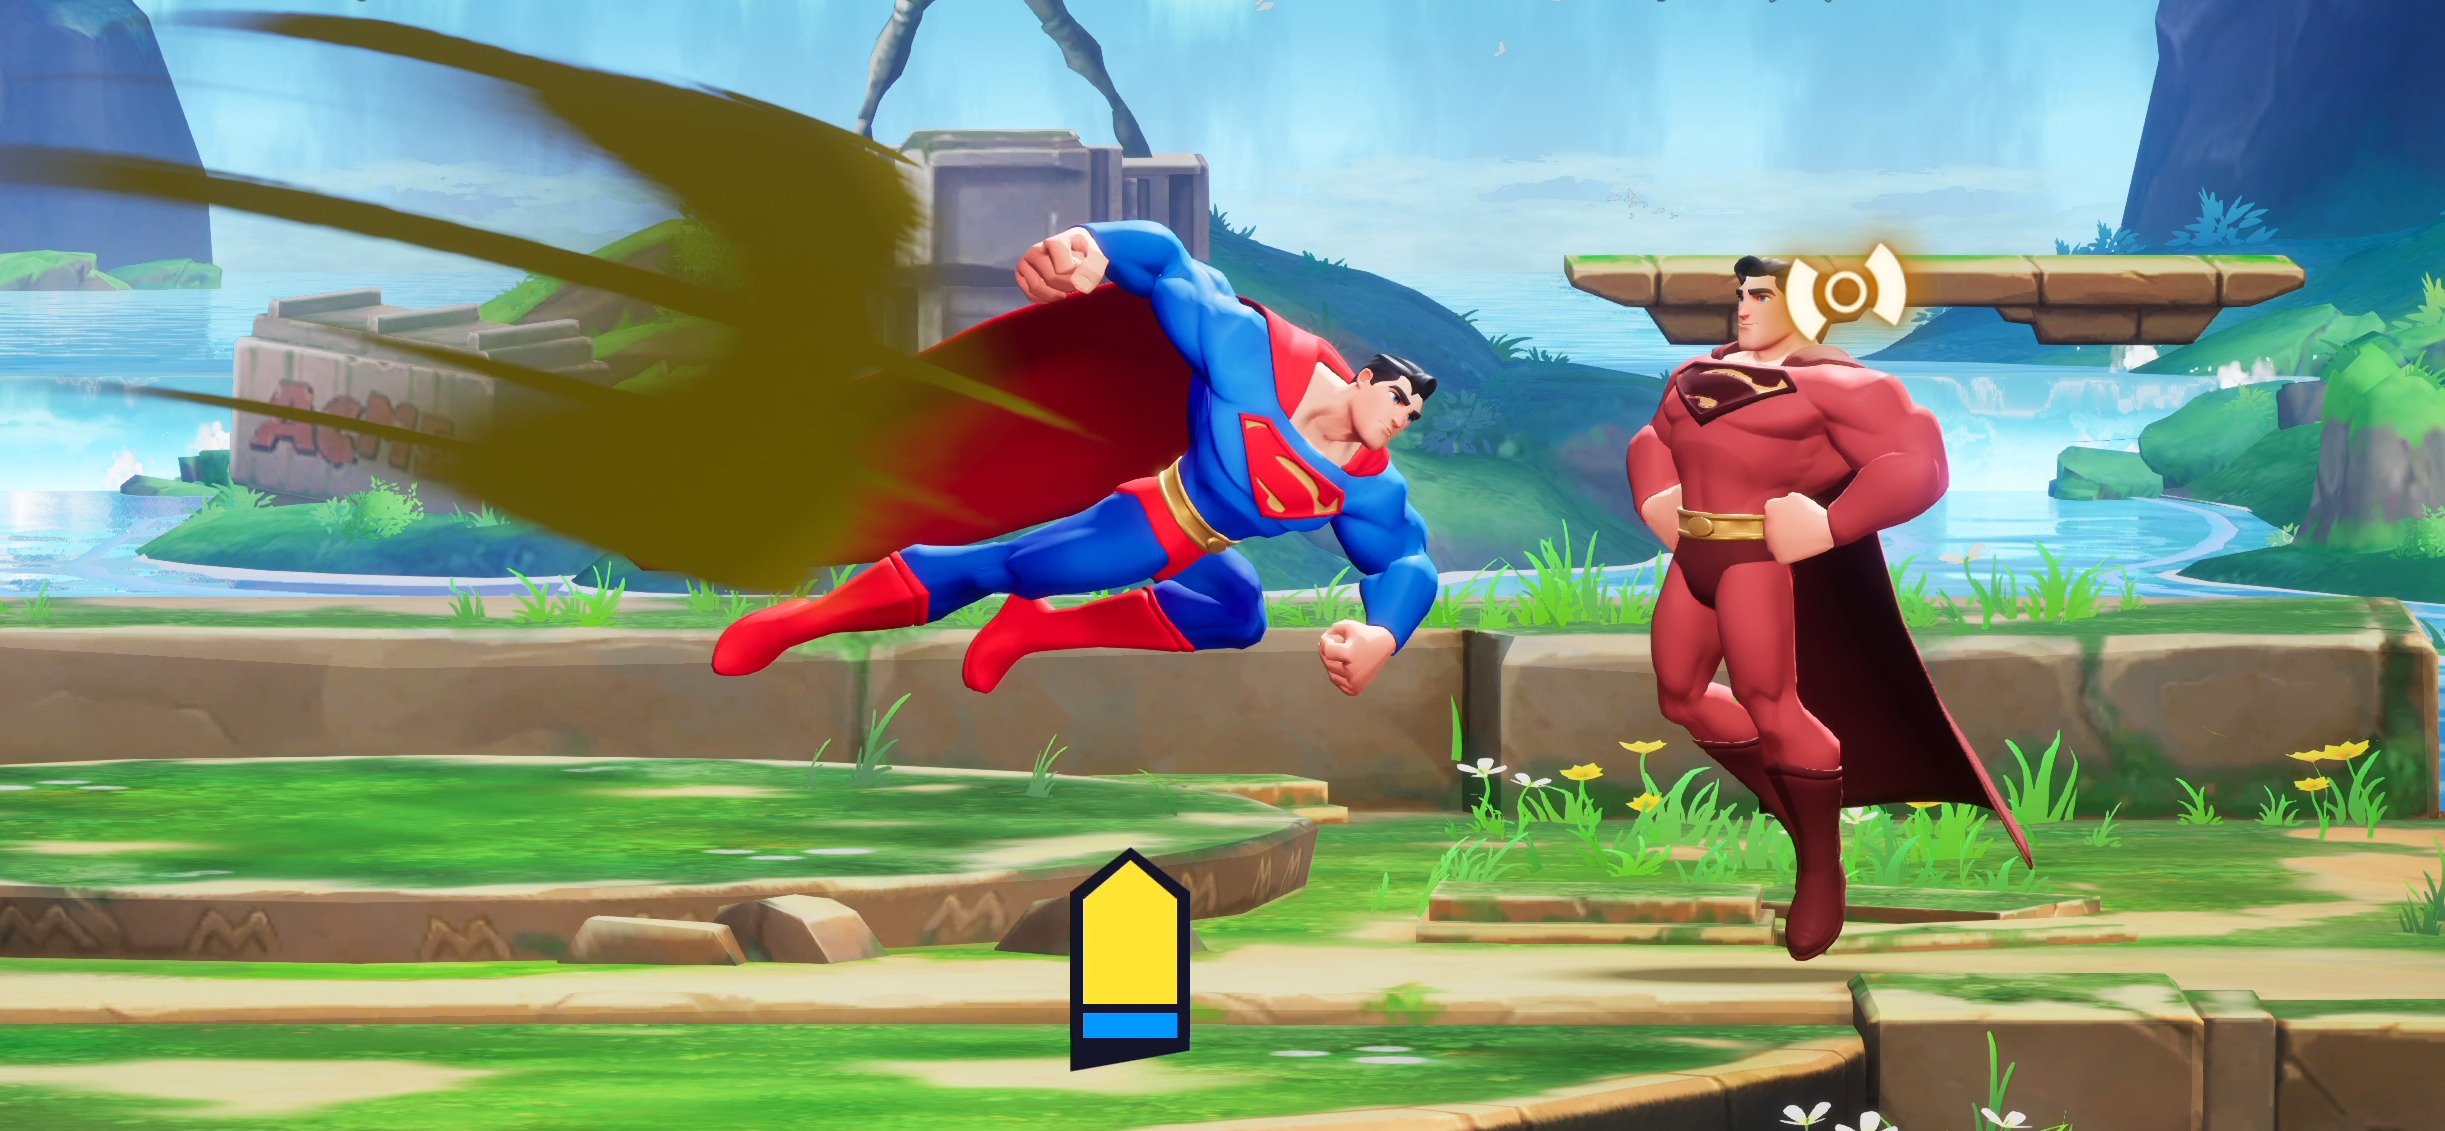 First Look at “MultiVersus” Video Game from Warner Bros. Games - Superman  Homepage